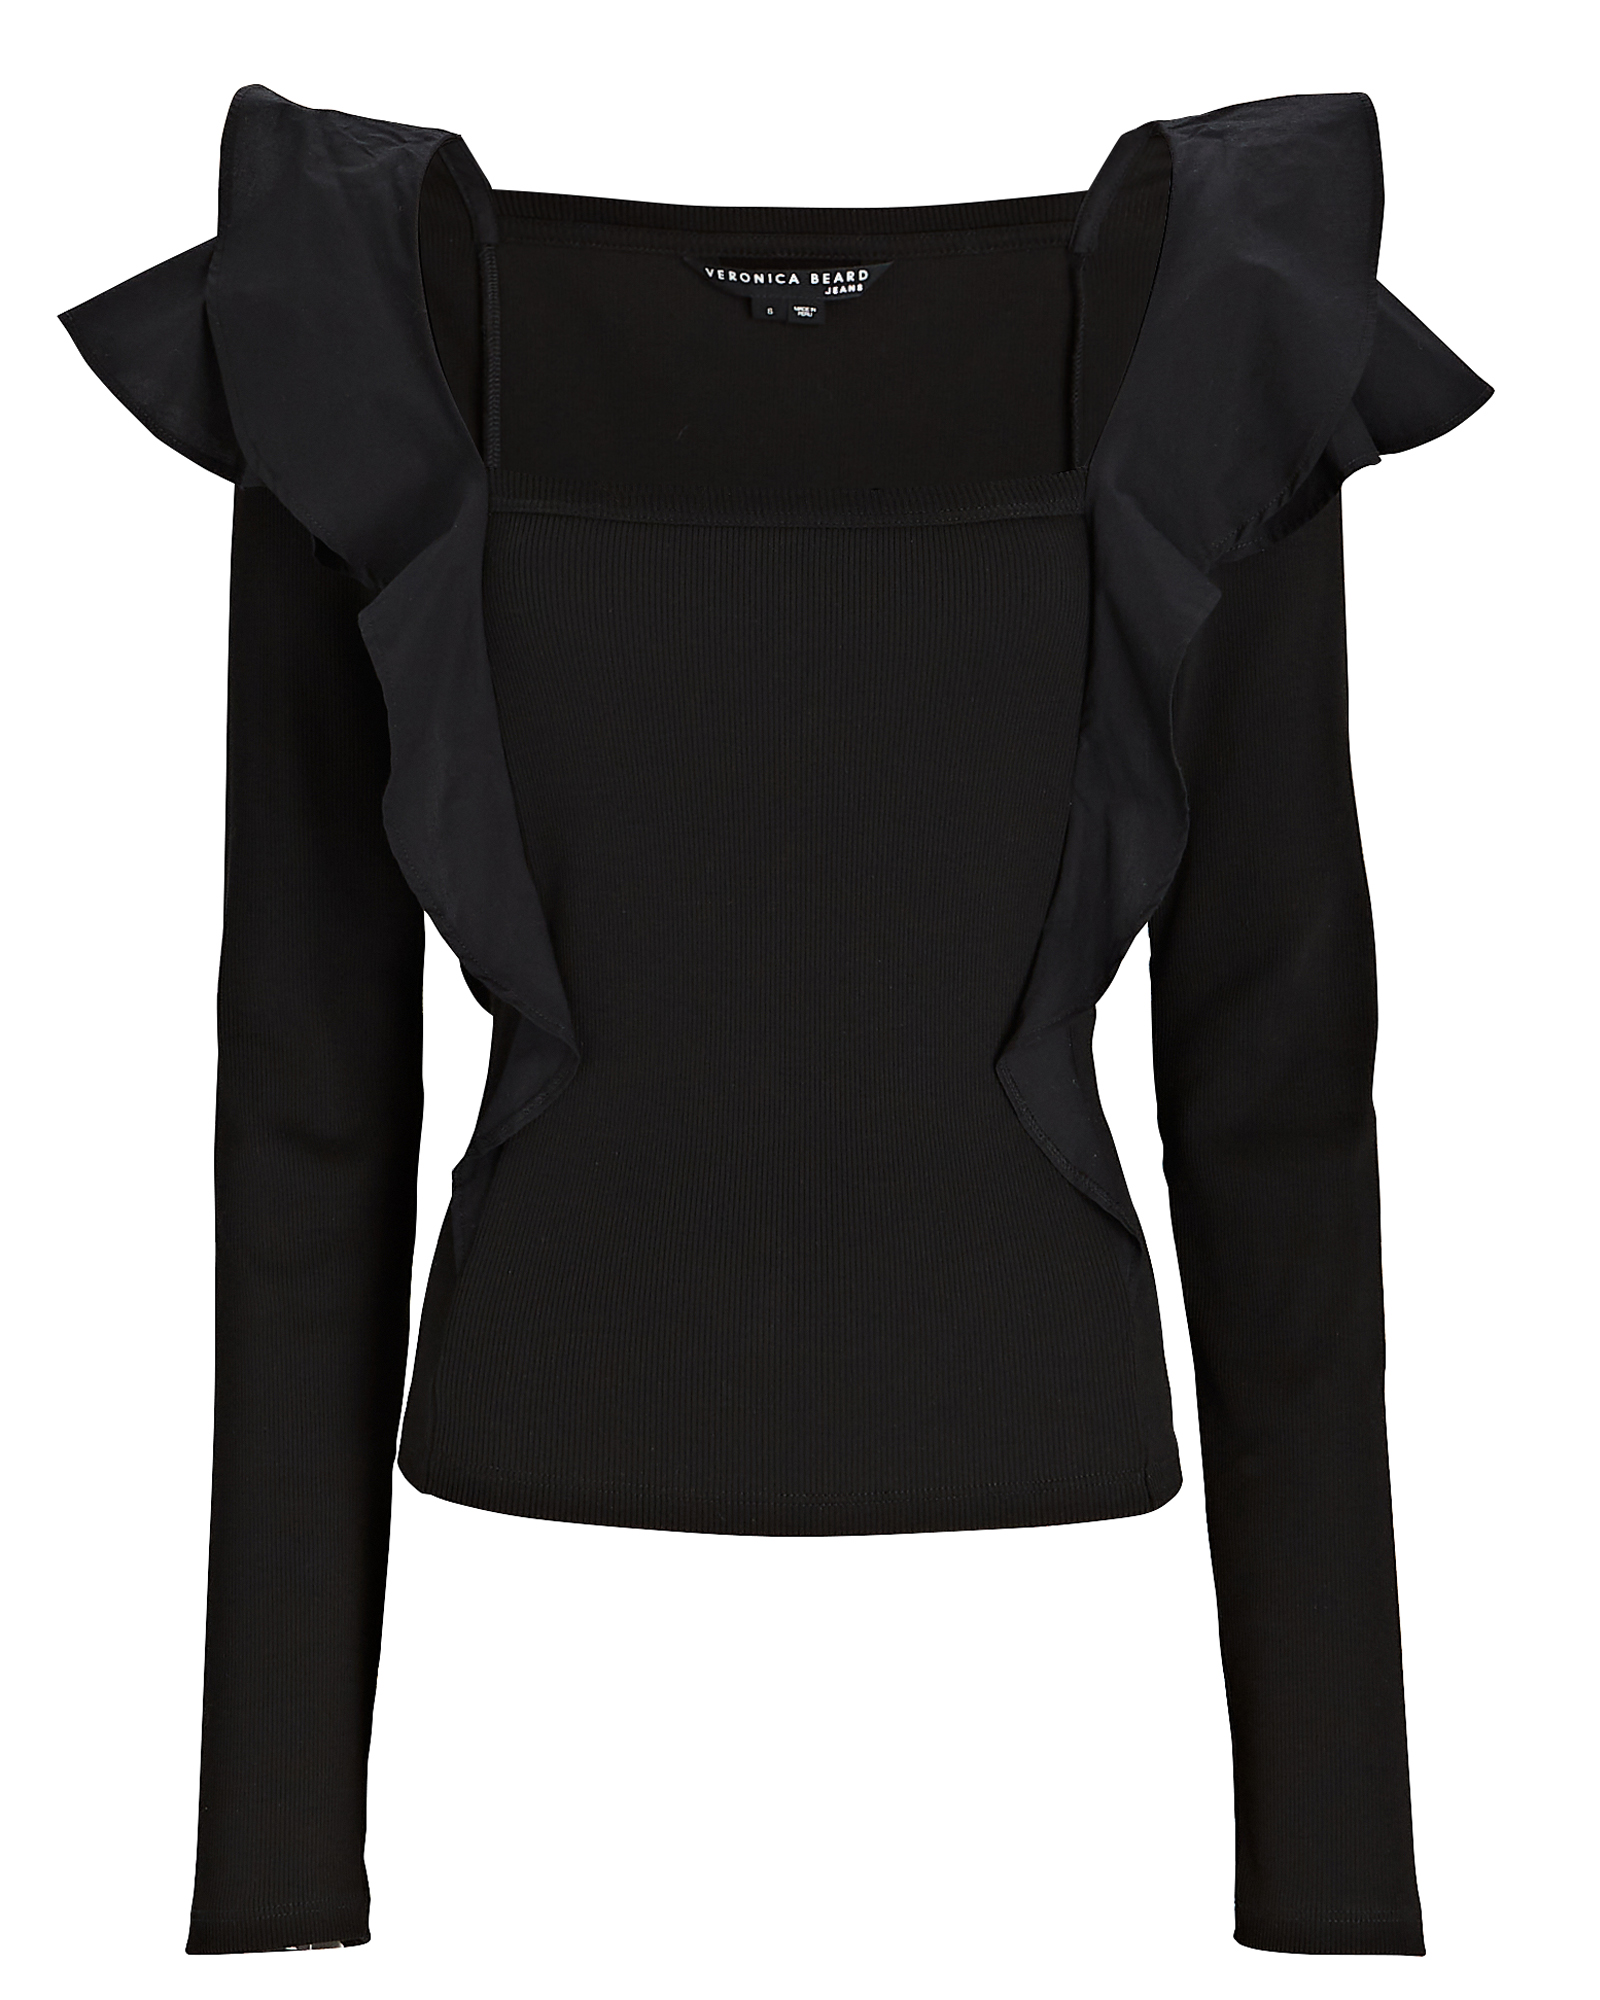 Veronica Beard Gidea Top in Black | INTERMIX®